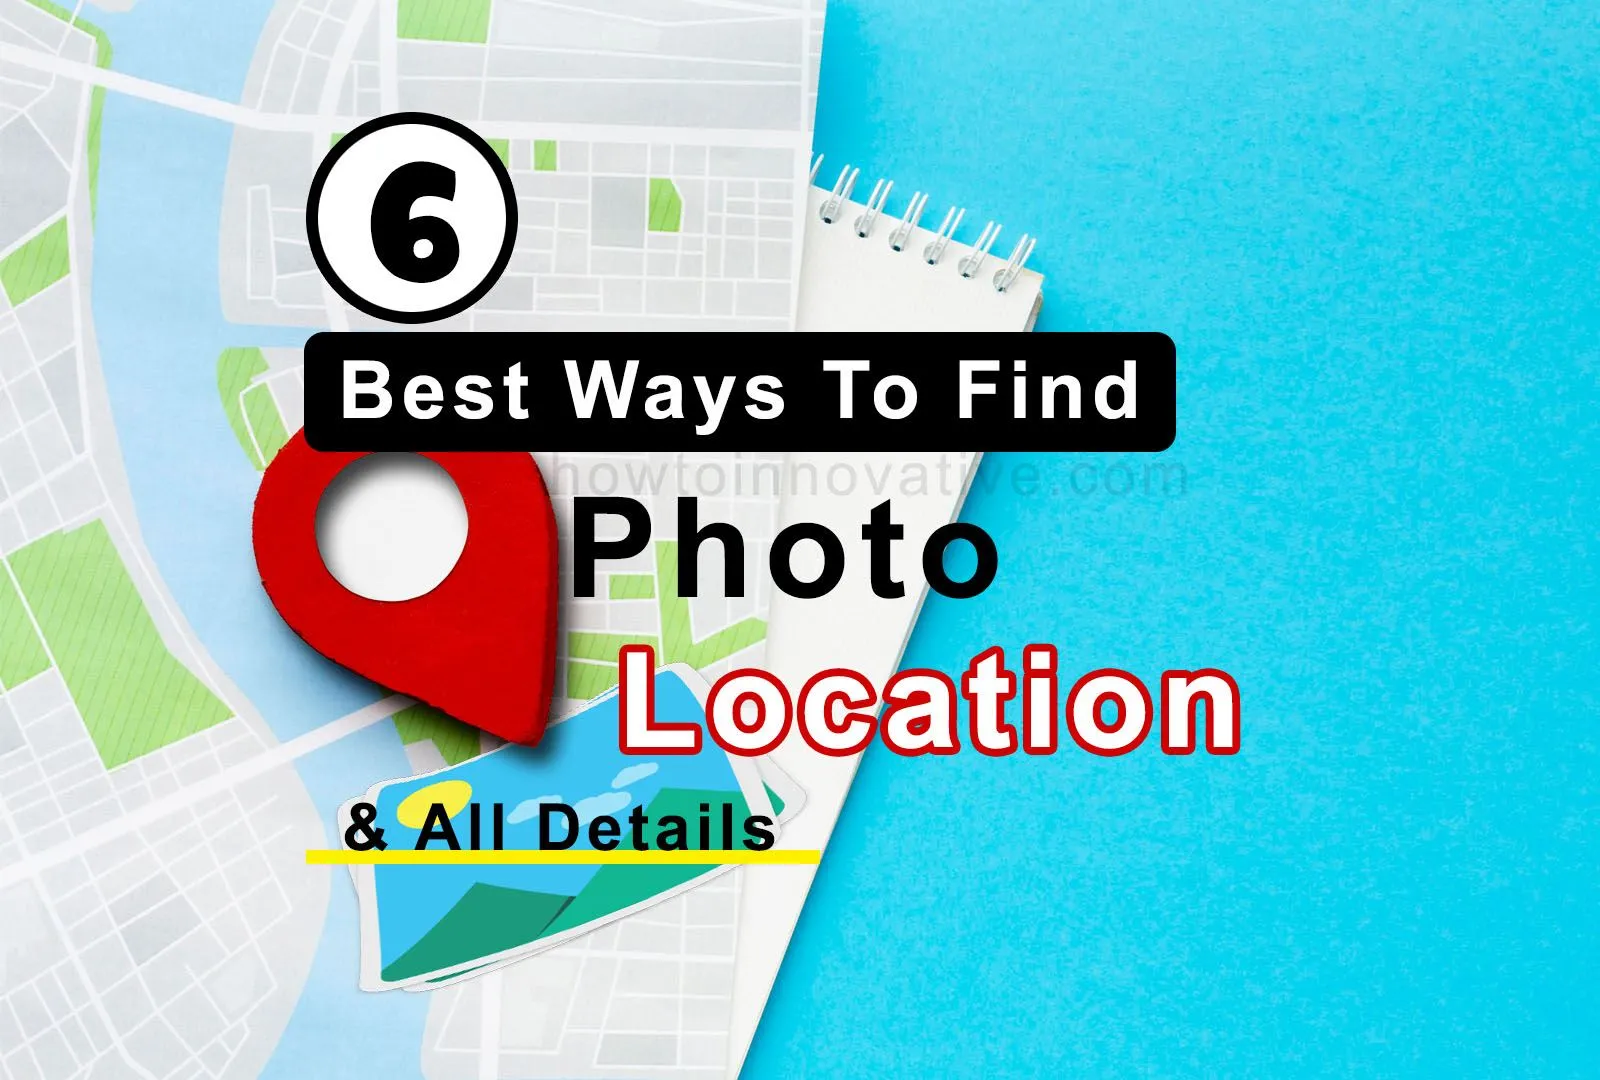 6 Best Ways To Find Photo Location & All Details